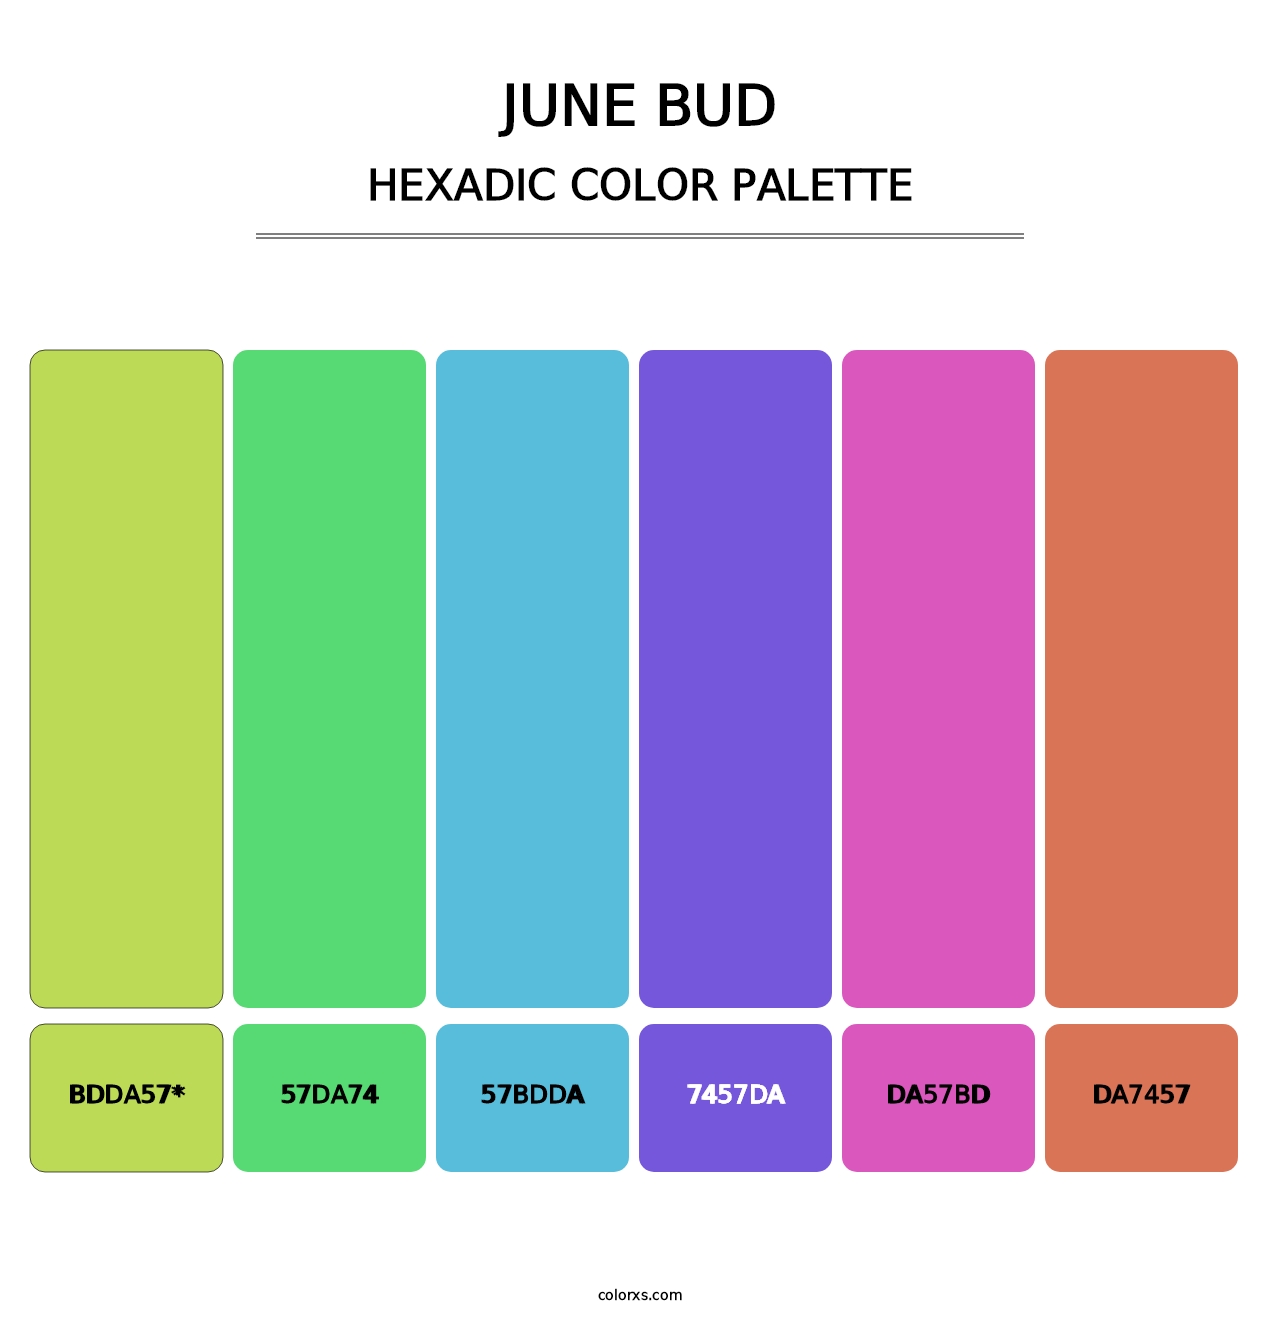 June Bud - Hexadic Color Palette